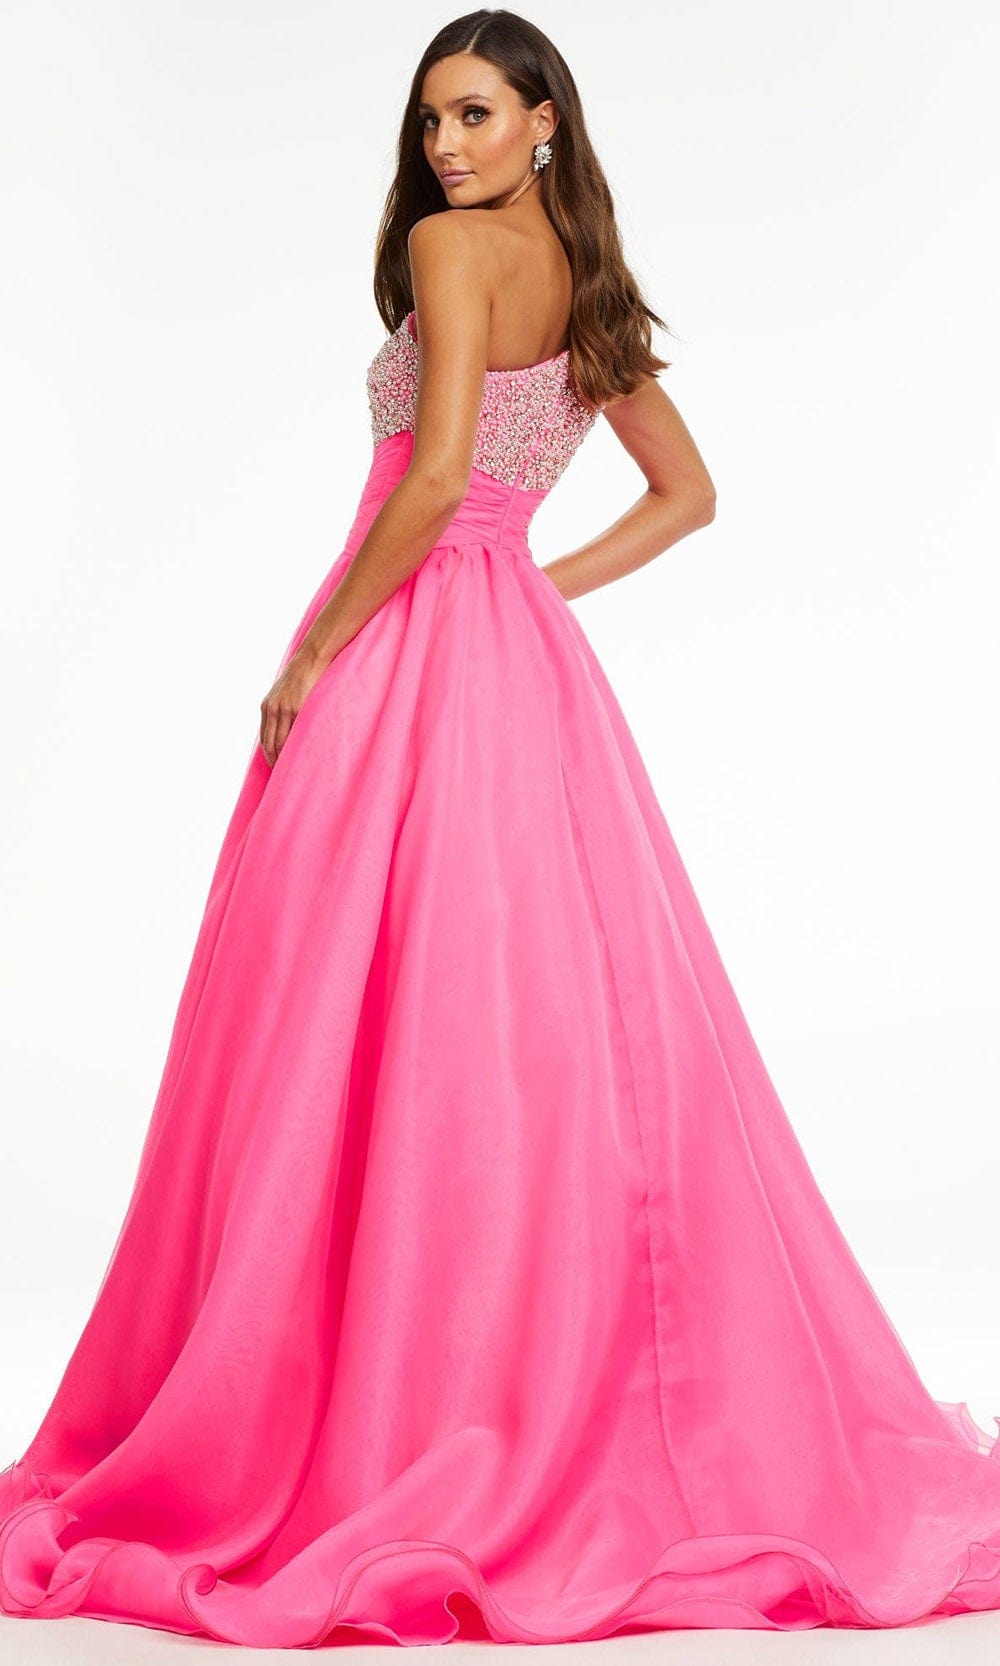 Ashley Lauren - 11127 Beaded Organza Ballgown Prom Dresses